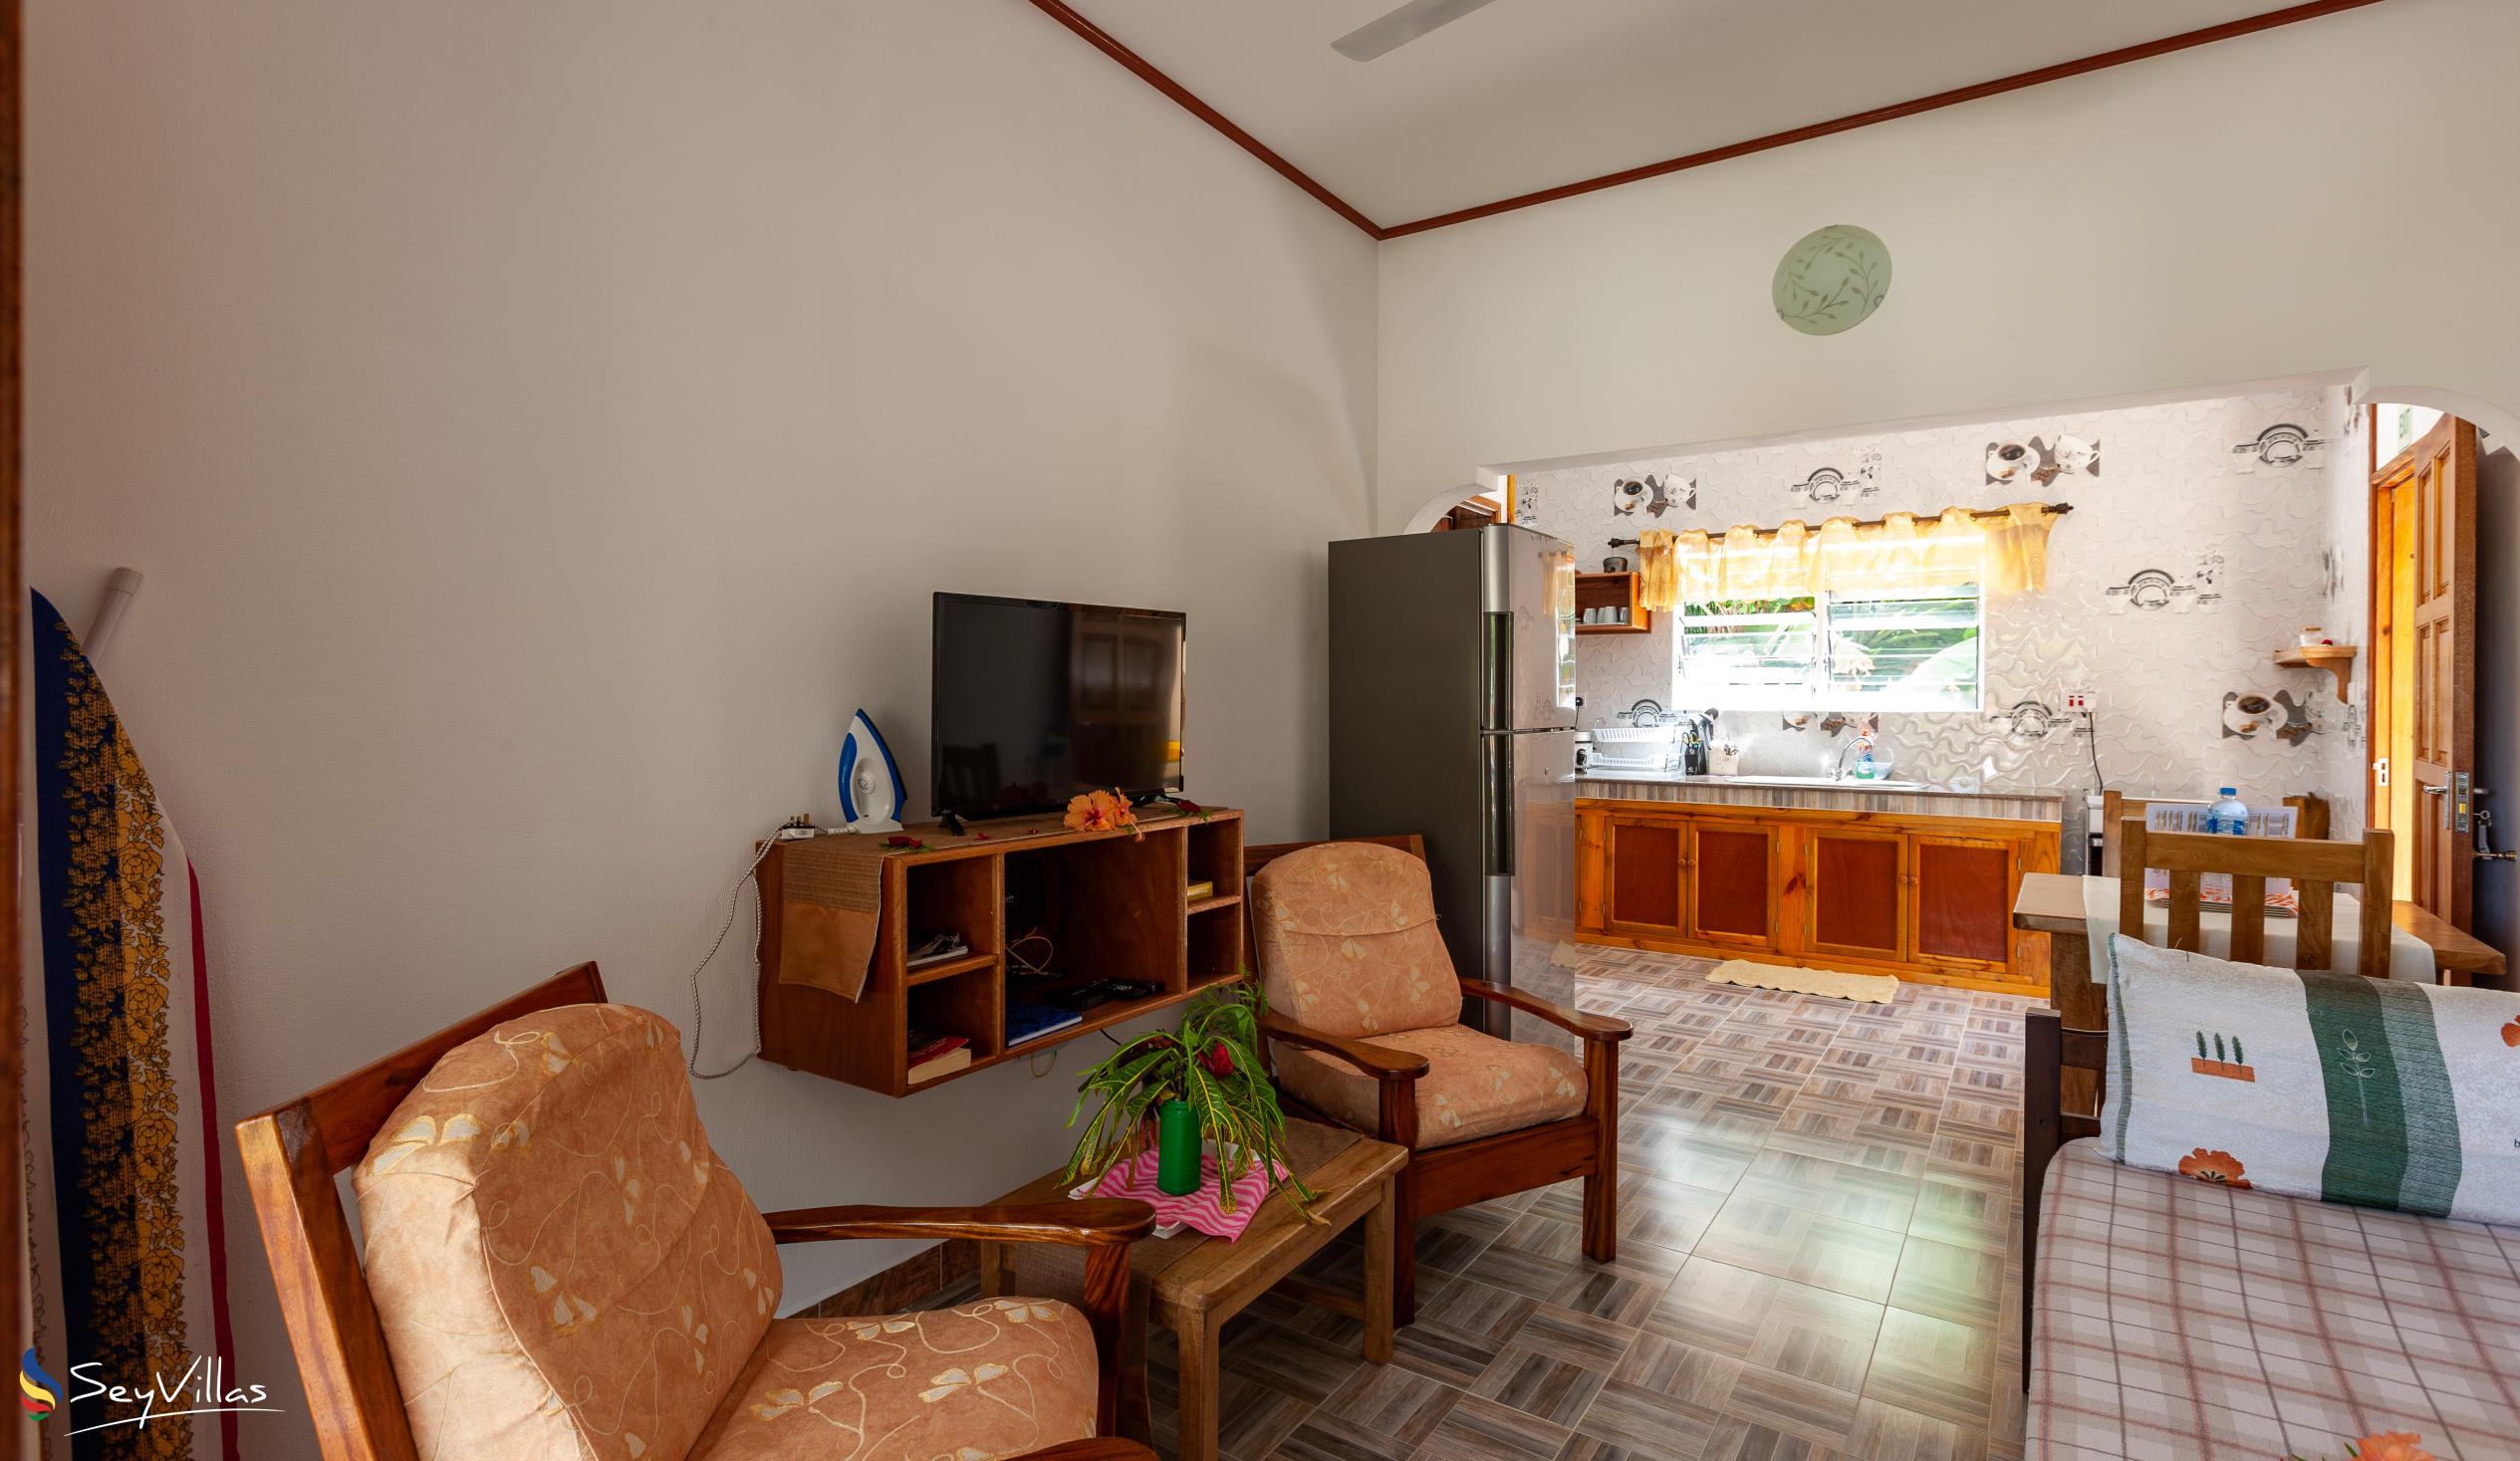 Photo 37: La Residence d'Almee - 1-Bedroom Apartment - Praslin (Seychelles)